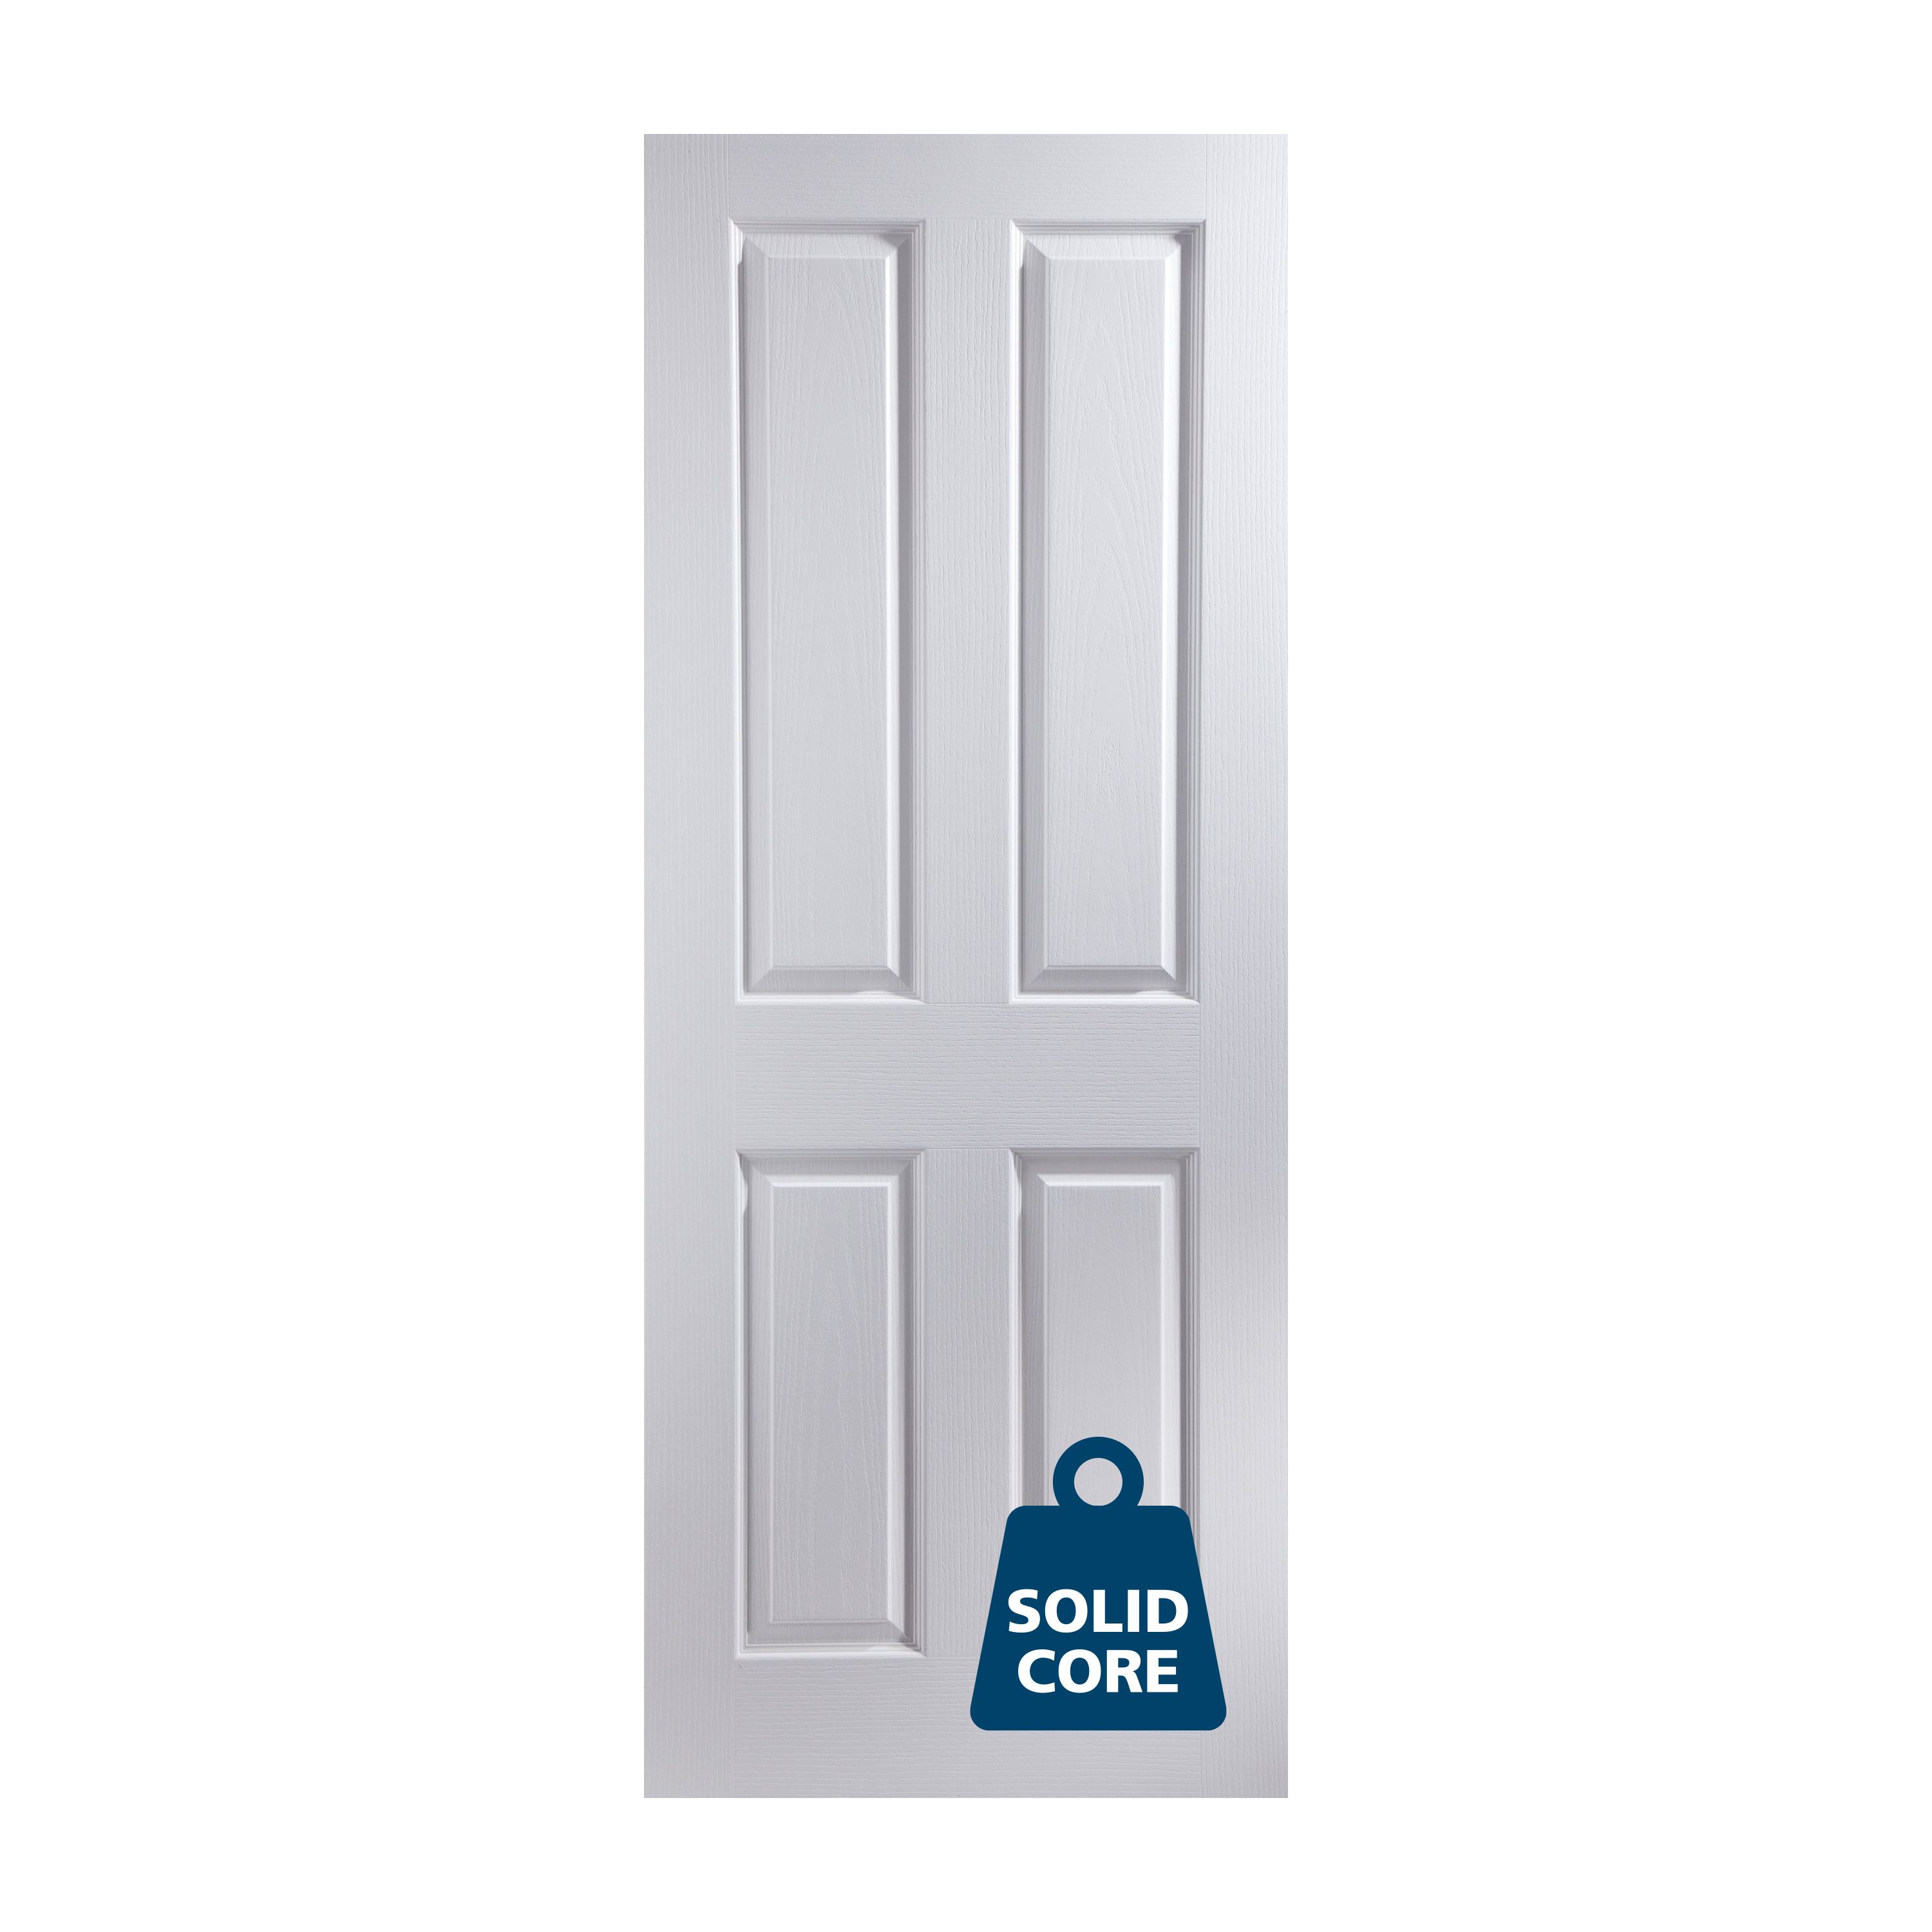 Jeld-Wen 4 panel Solid core Unglazed Contemporary White Internal Door, (H)1981mm (W)686mm (T)35mm